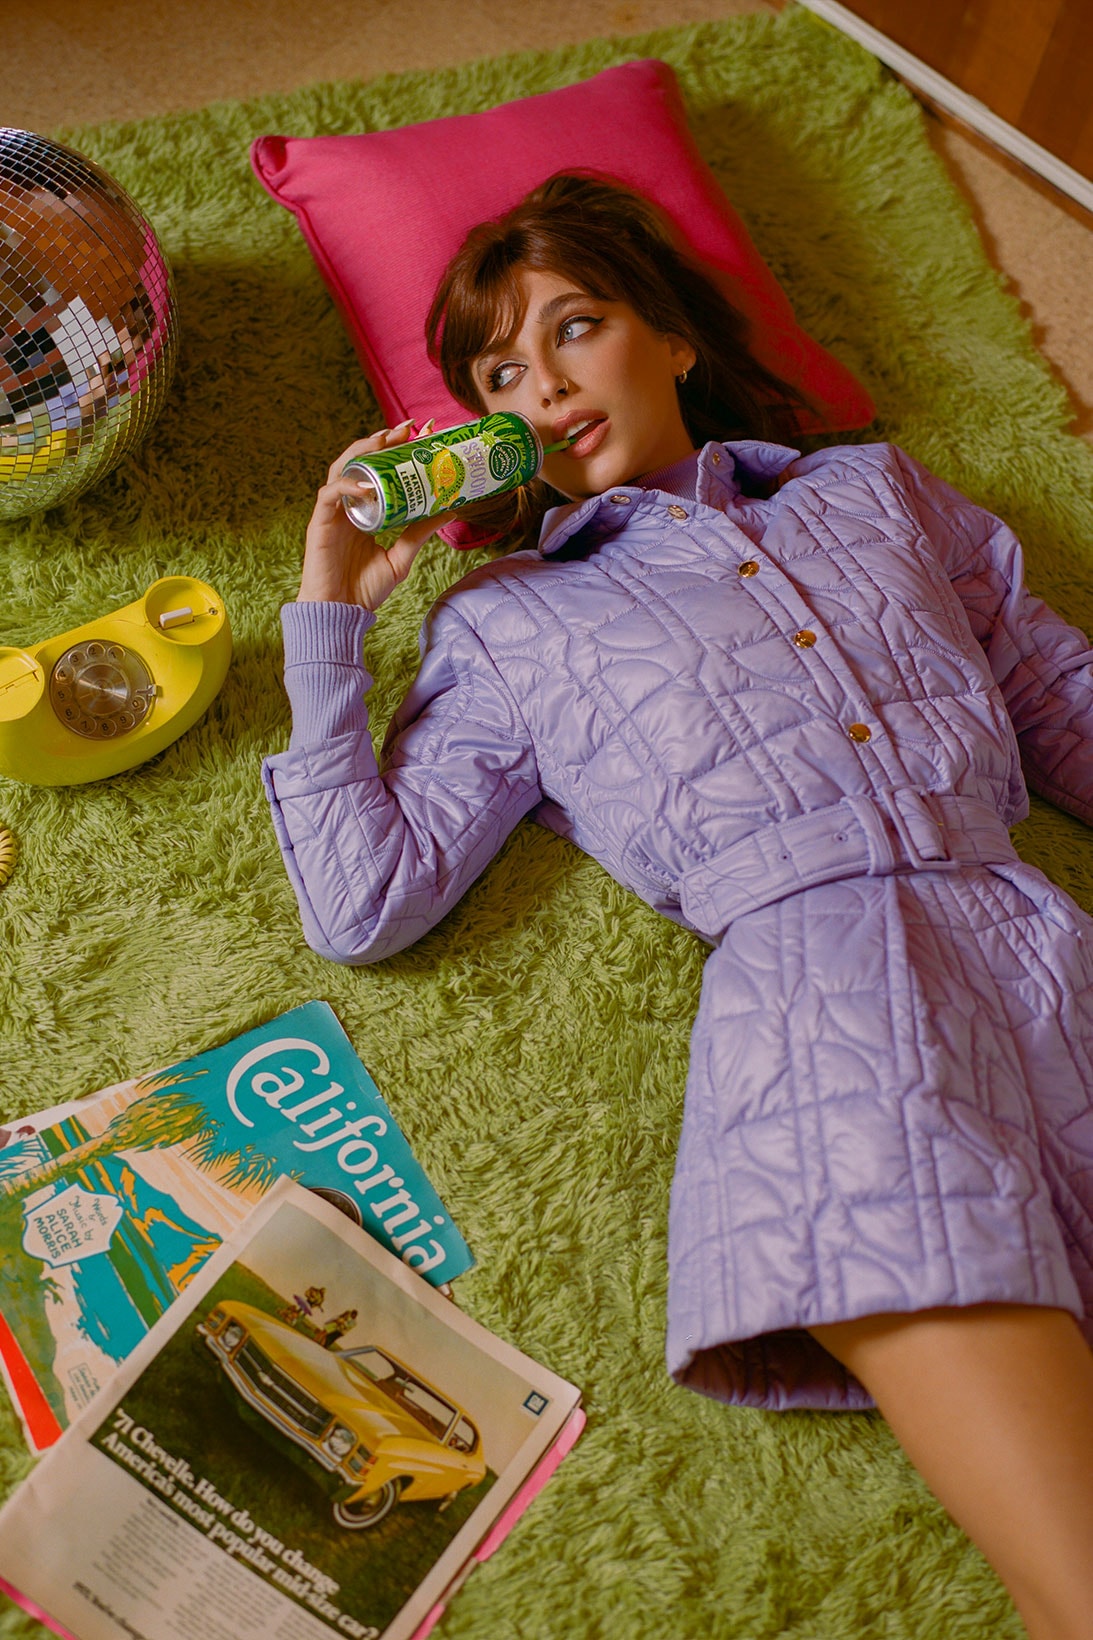 Emma Chamberlain Coffee Swoon Matcha Lemonade Collaboration Drink Release Where to buy